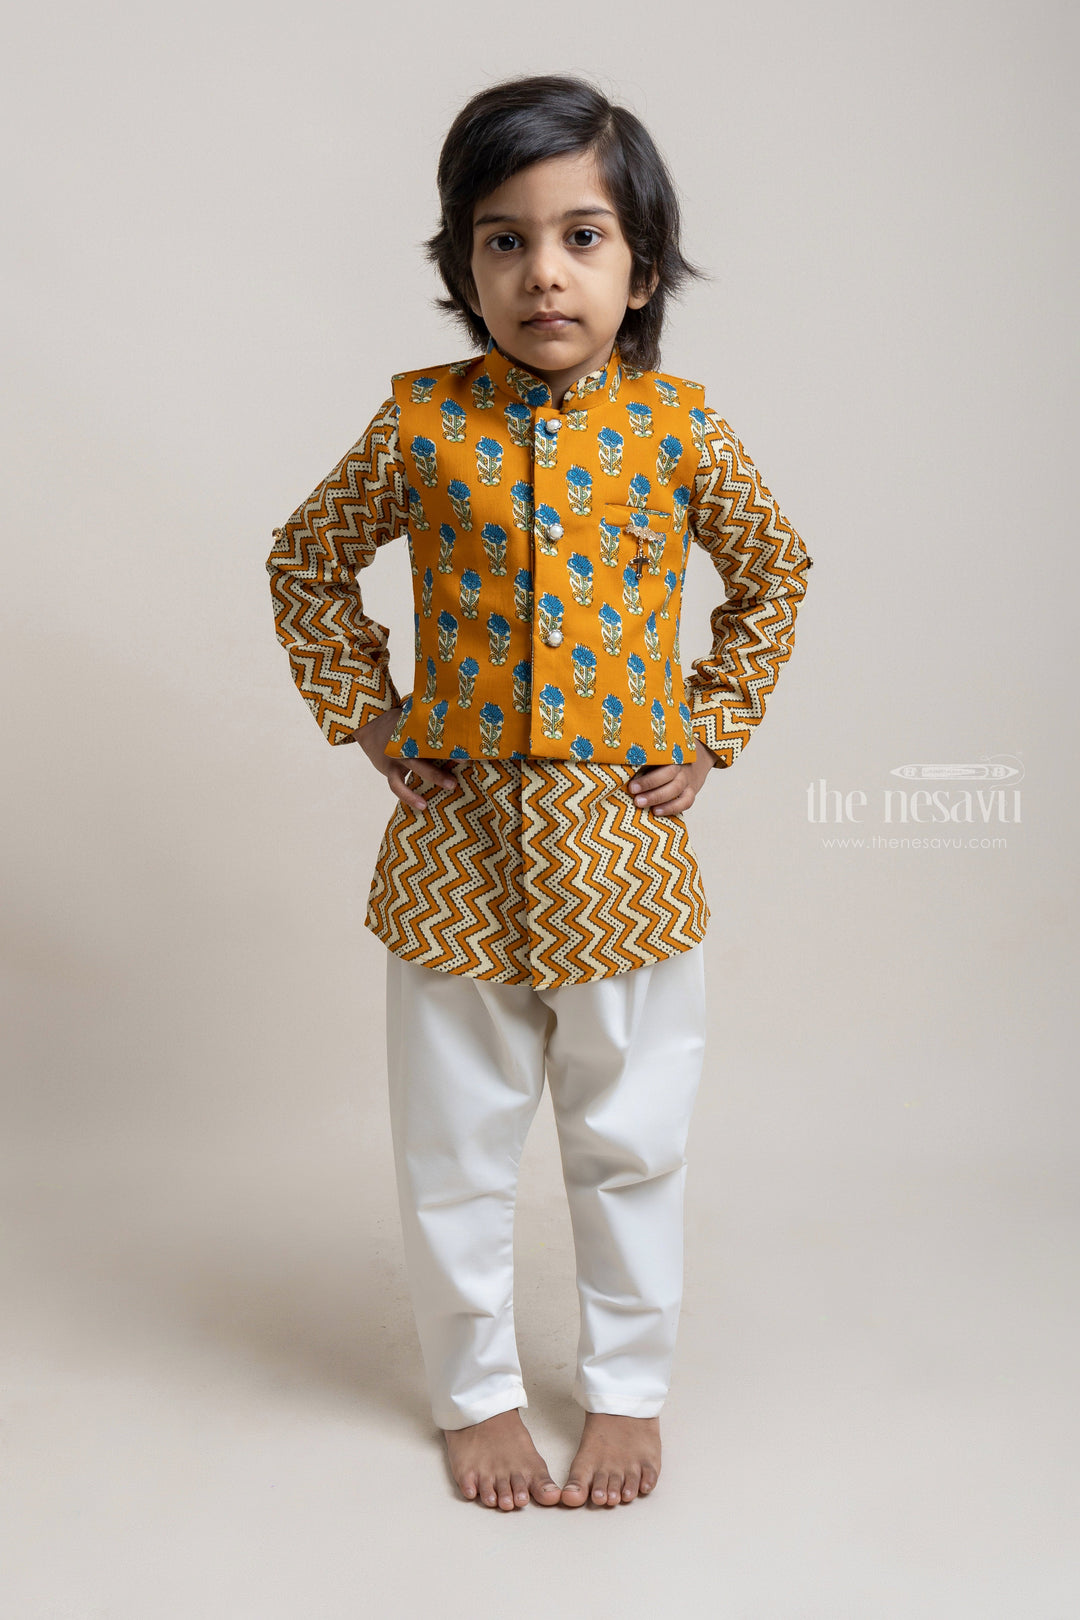 The Nesavu Boys Jacket Sets Fashionable Mustard Yellow Zig-Zag Printed Kurta Set With Overjacket For Boys Nesavu 12 (3M) / Yellow BES289C-12 Traditional Kids Wear | High-Quality Kurta set | The Nesavu